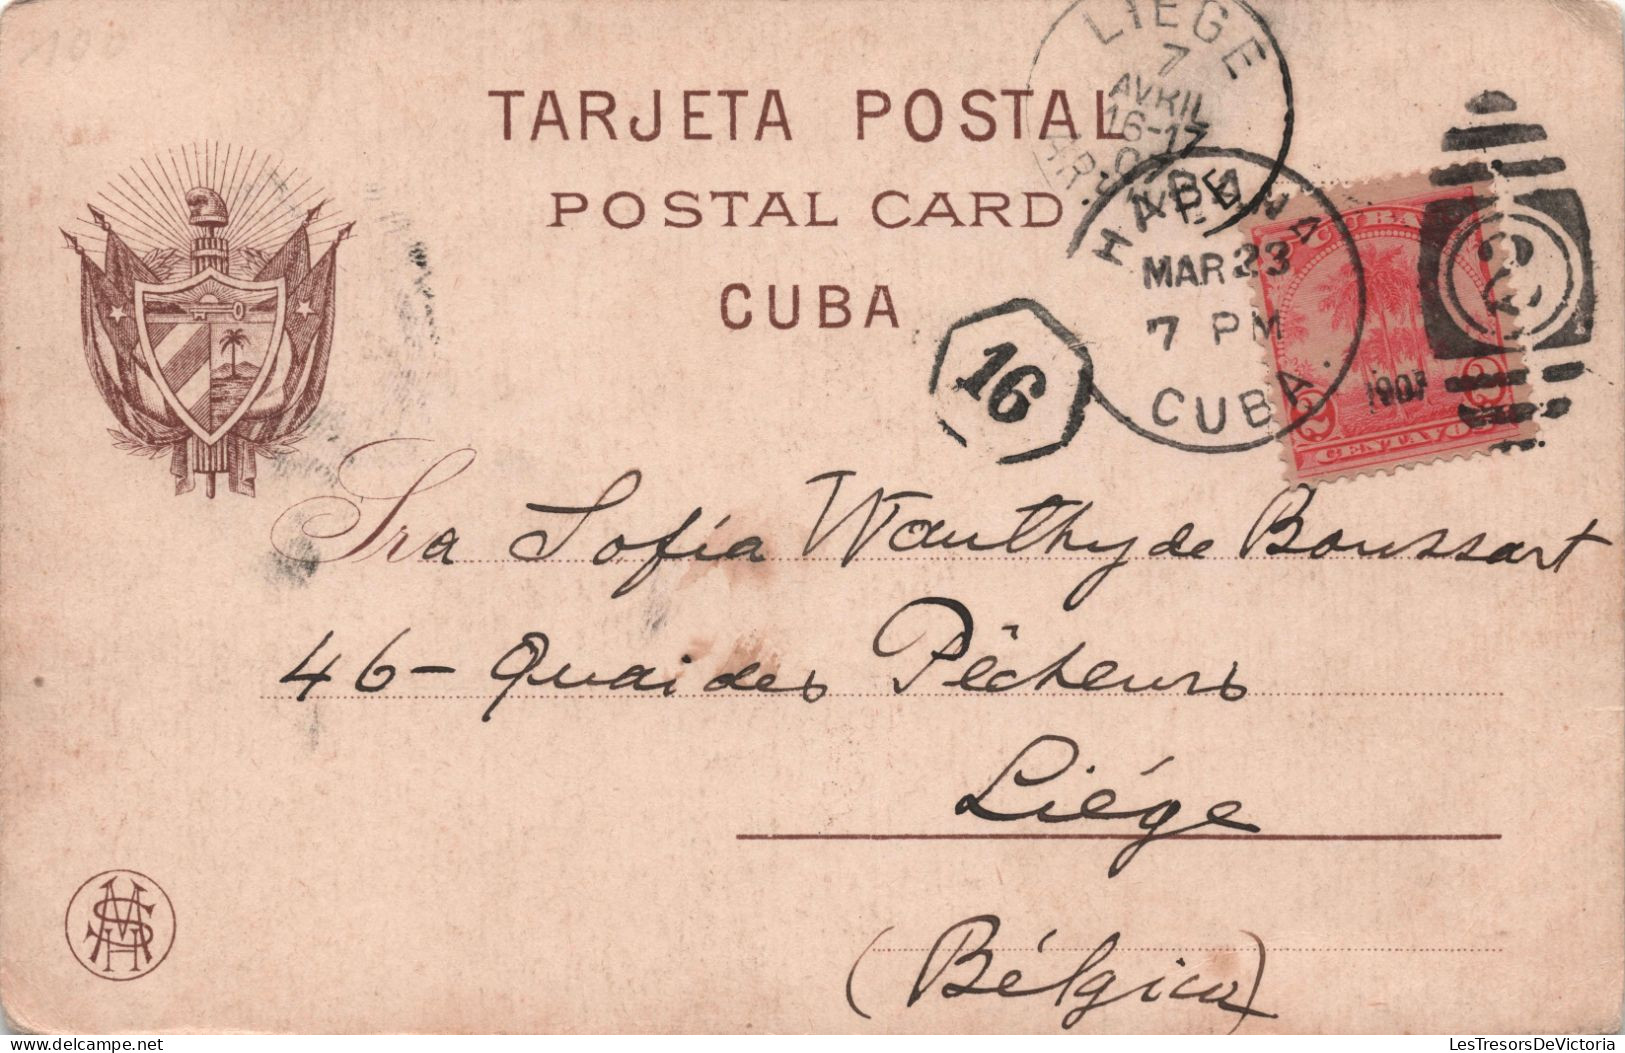 Antilles - CUBA - Habana Escogida De Pinas - Pineapple Choice - Edicion Jordi - Carte Postale Ancienne - Cuba